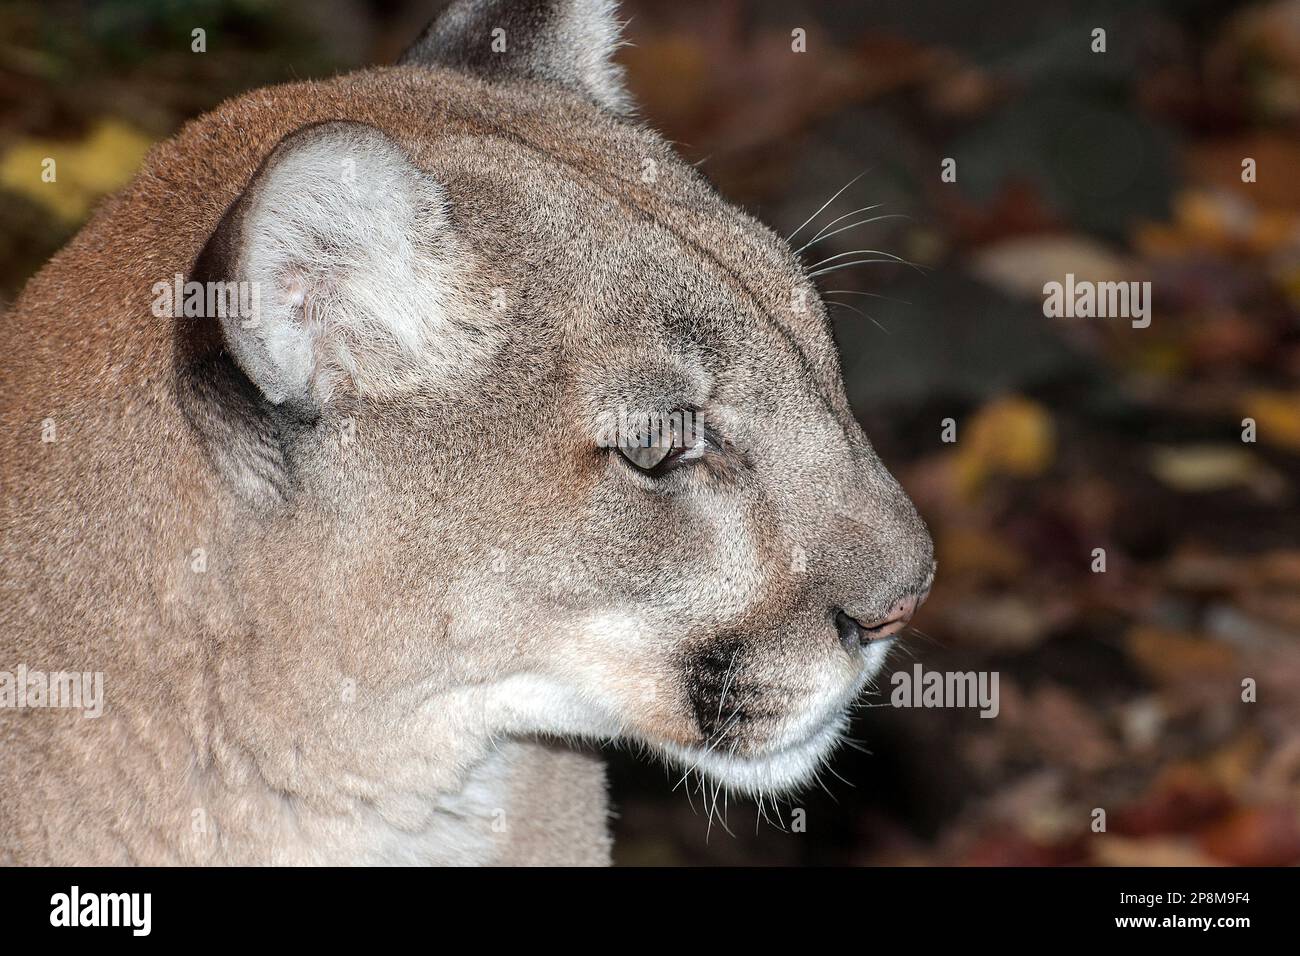 Mounatin lion close-up face side view. Stock Photo